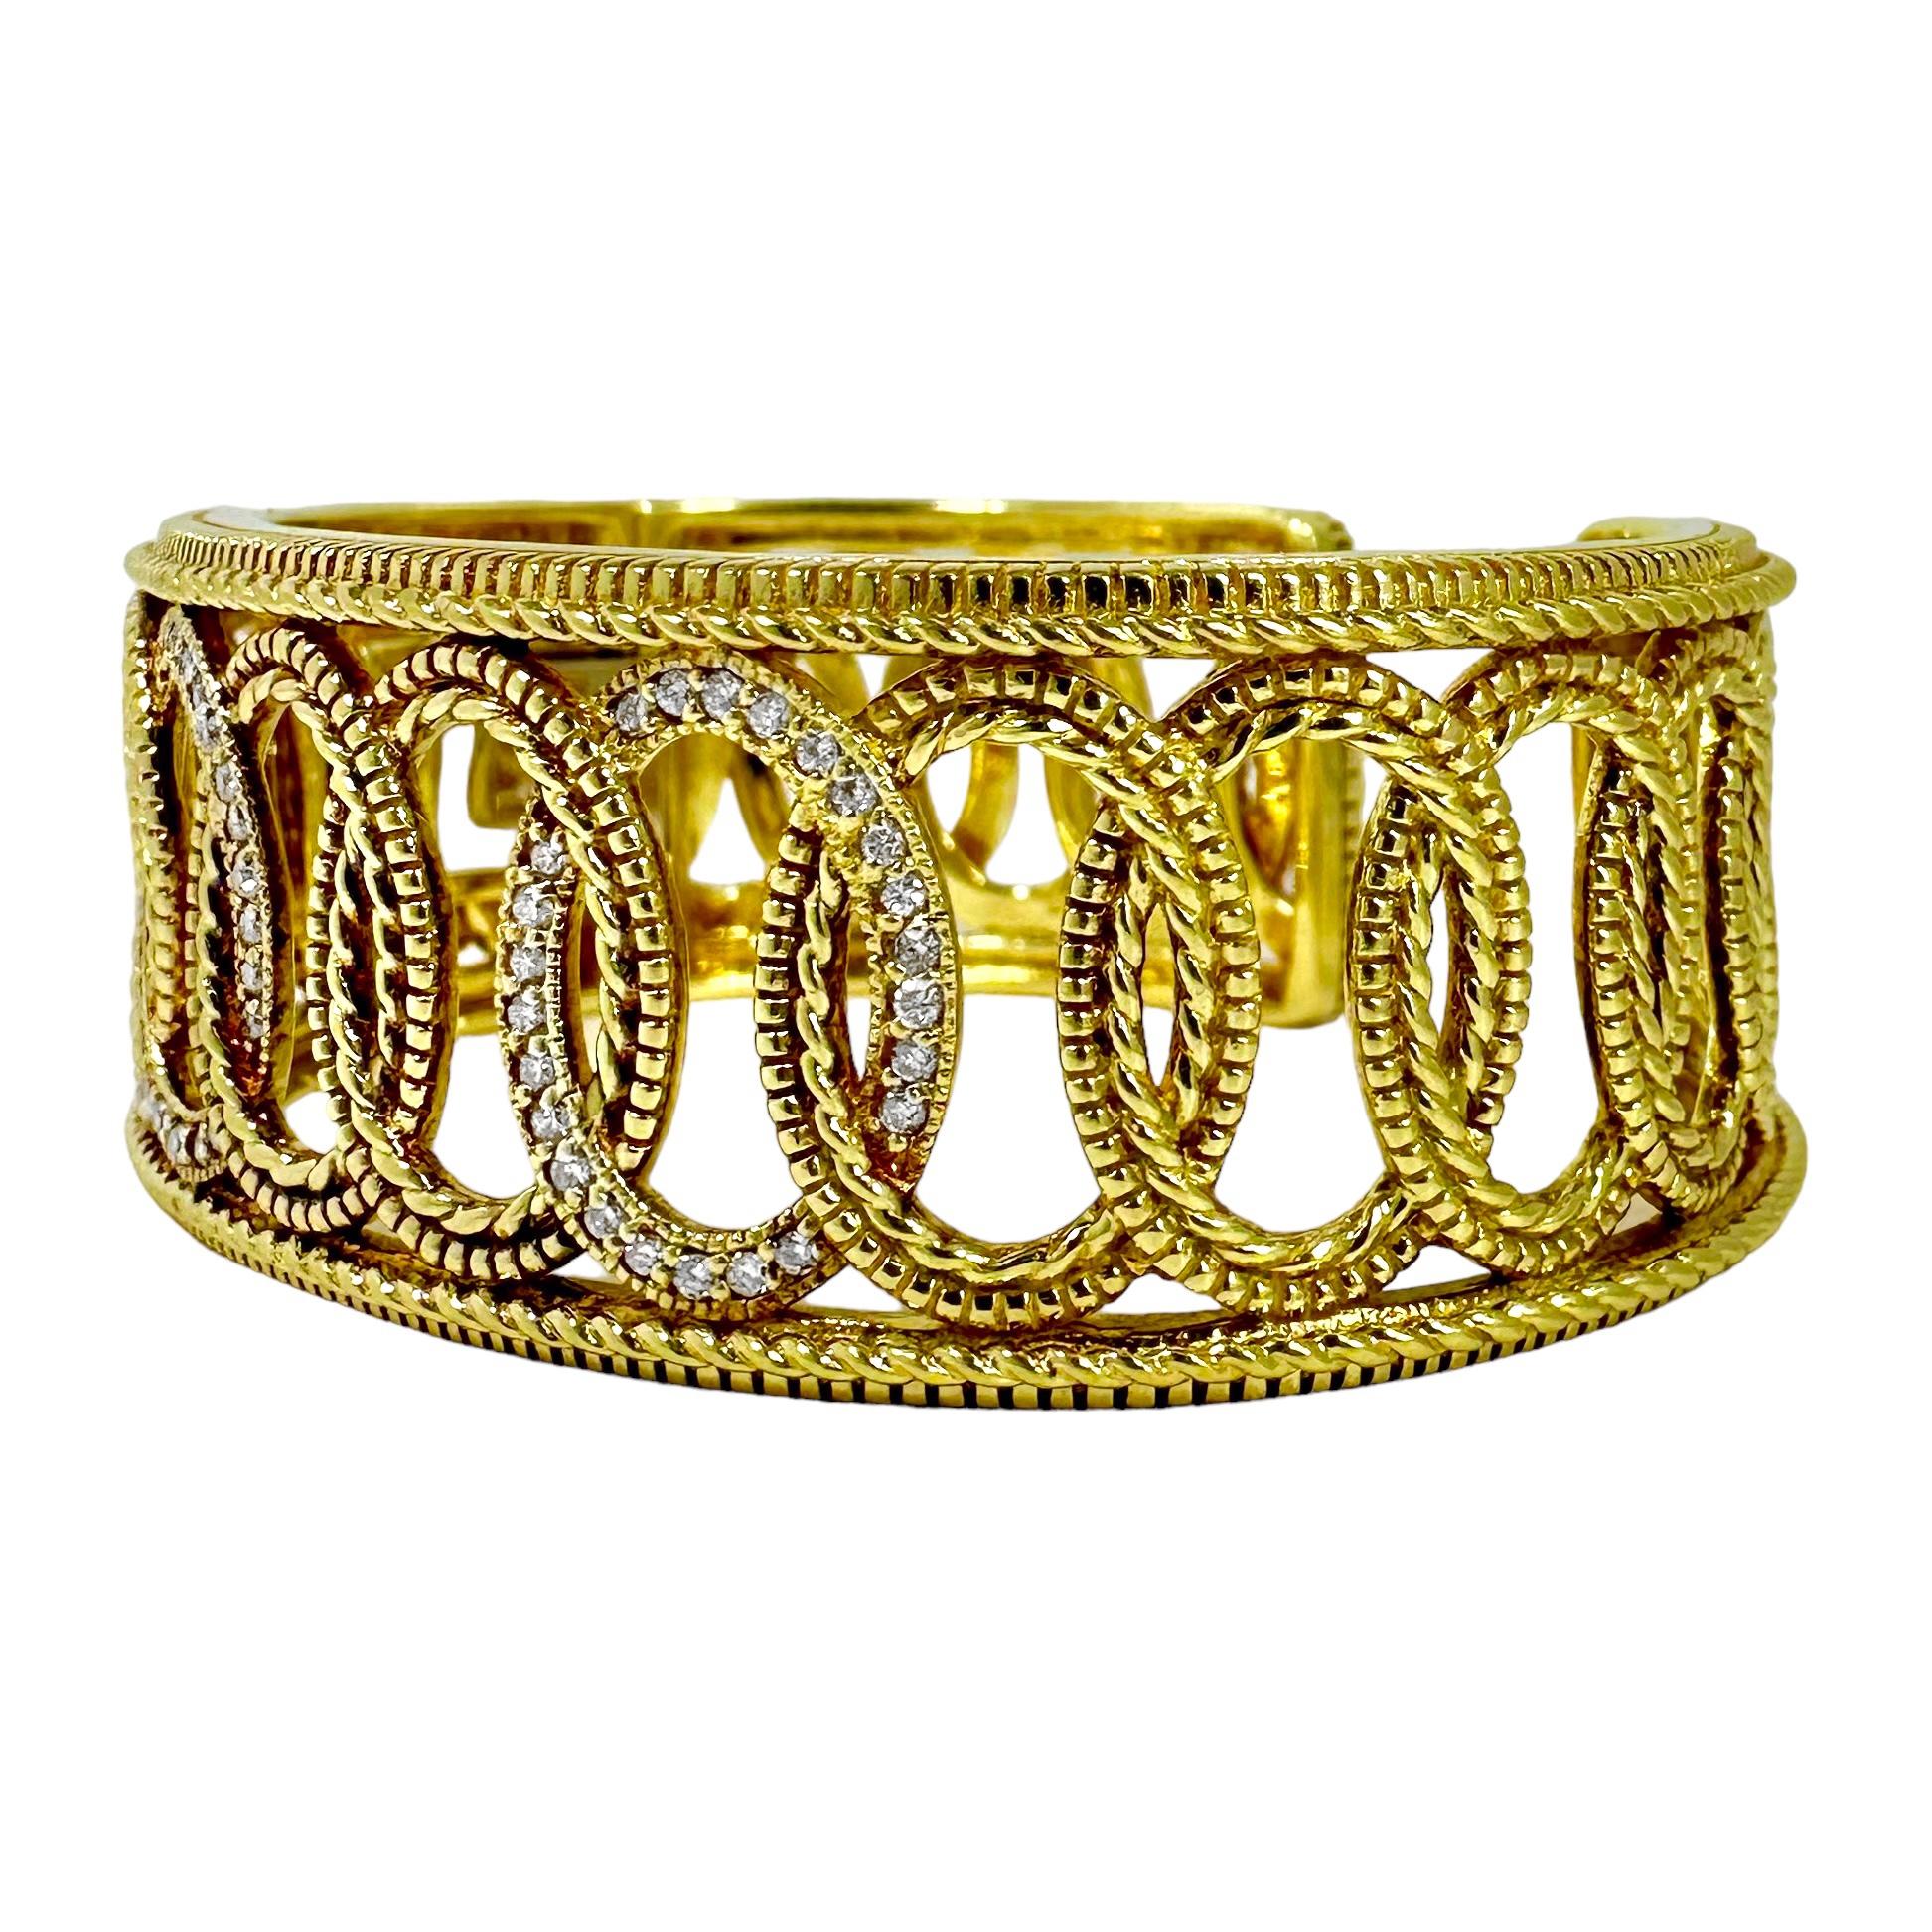 Modern Casual Judith Ripka 18k Gold Hinged, Cuff Bracelet with Diamonds 7/8 inch Wide 